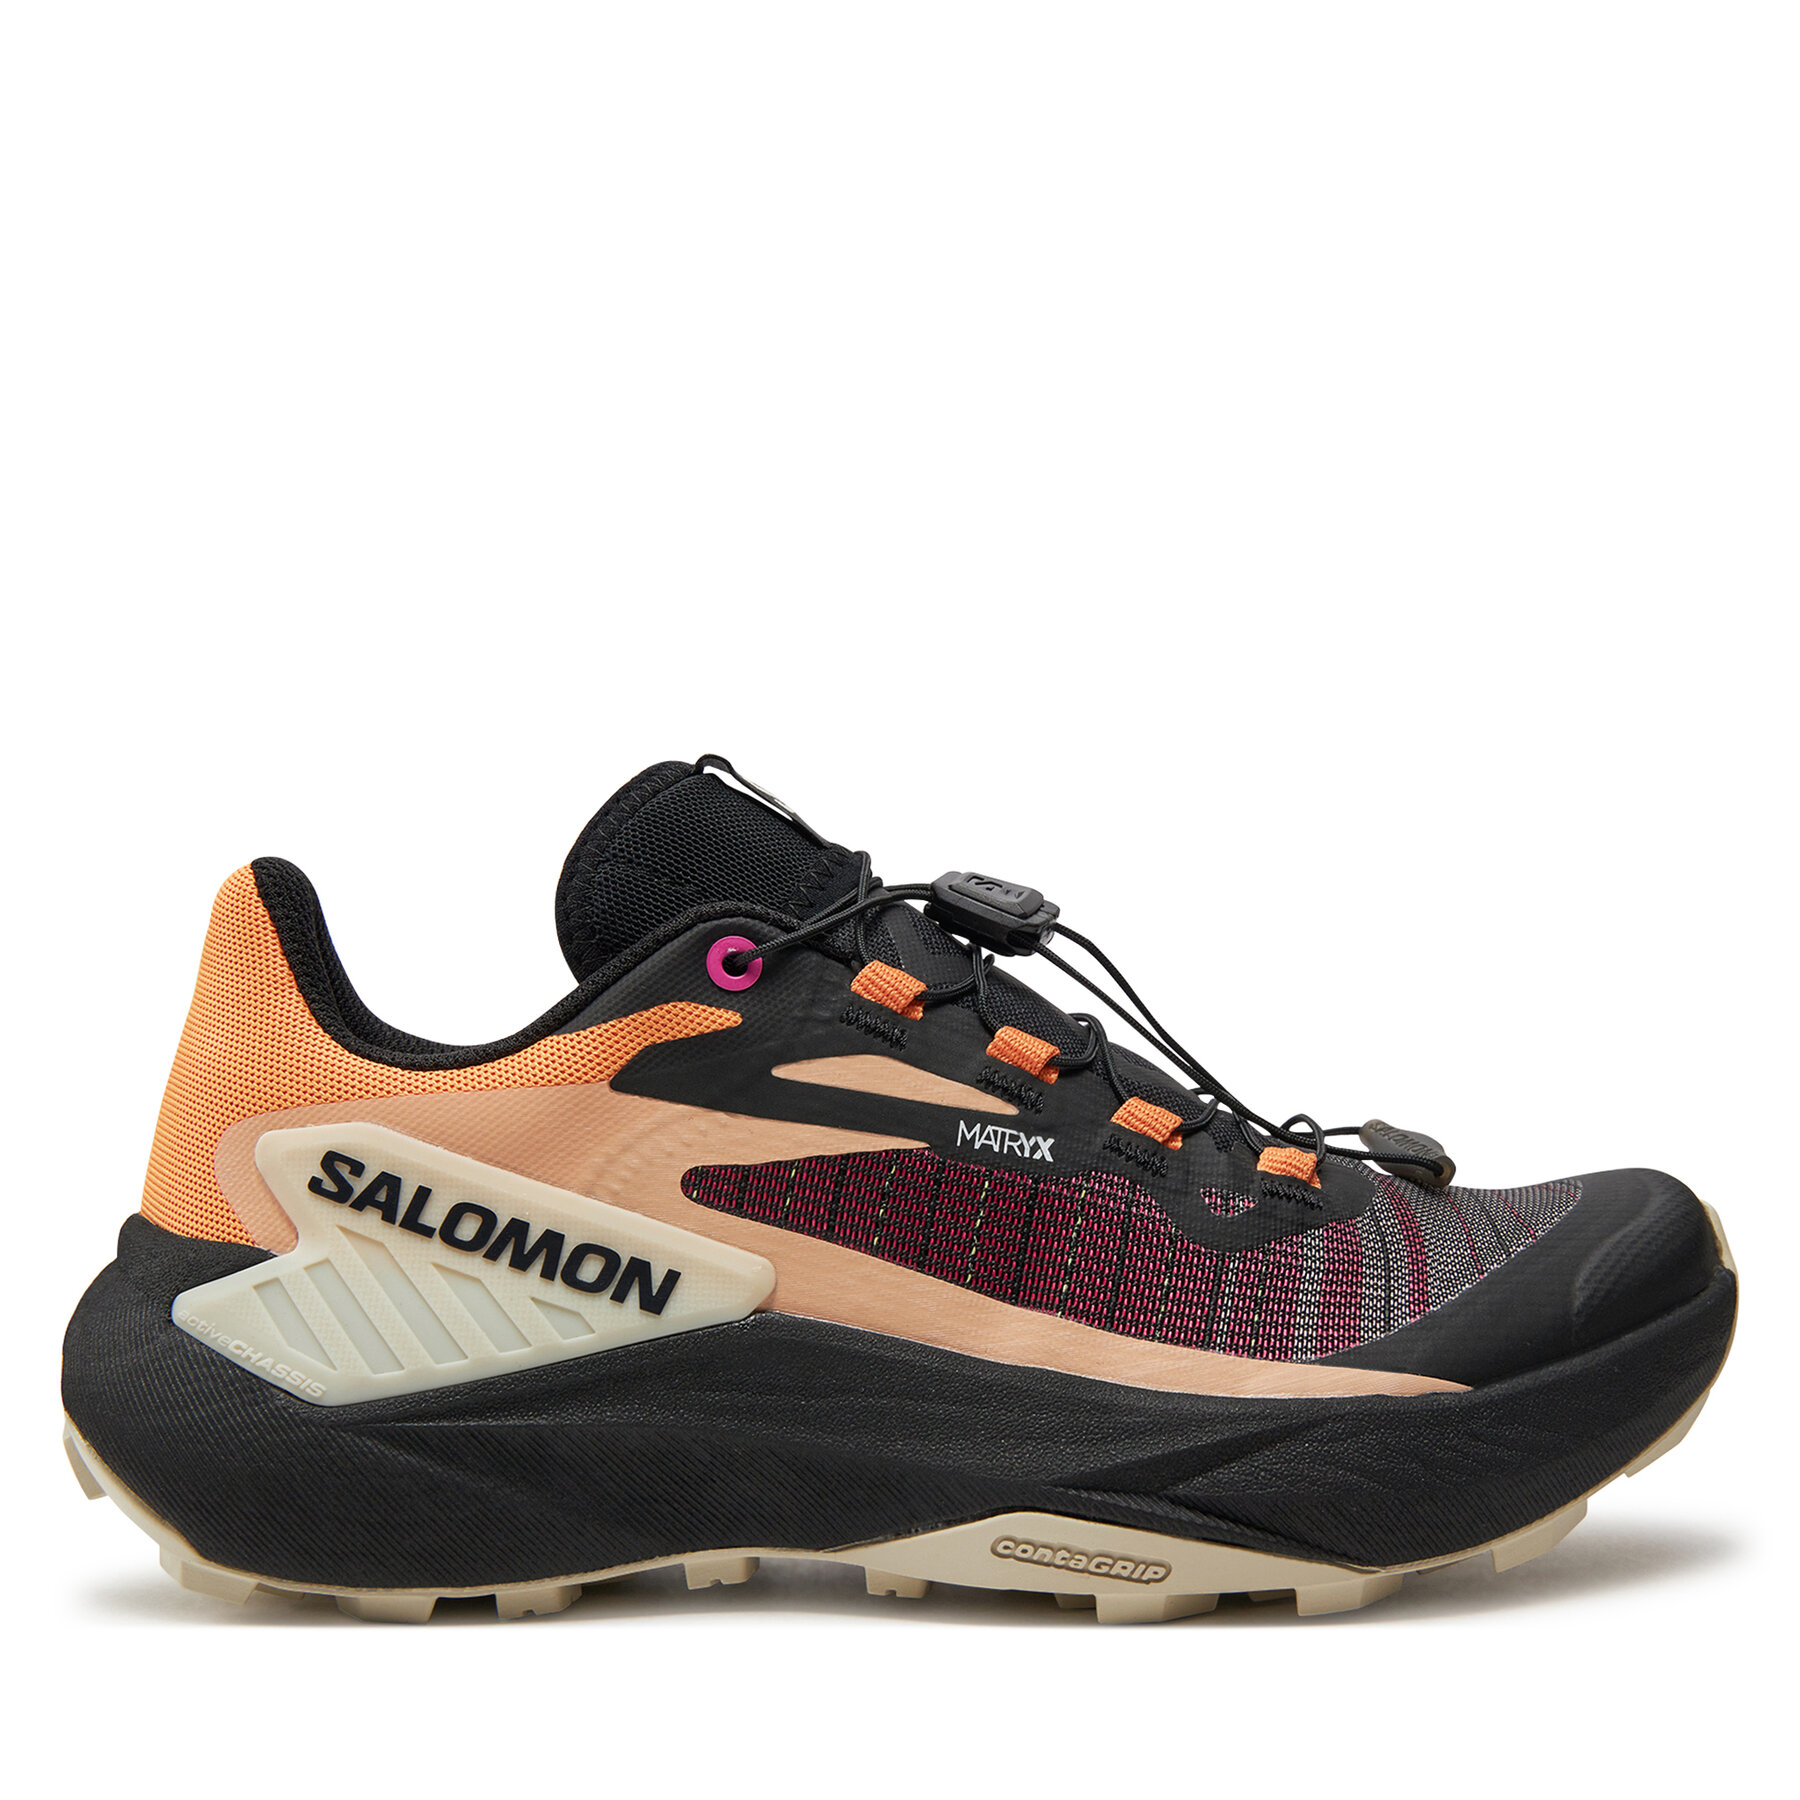 SALOMON GENESIS - Zapatos